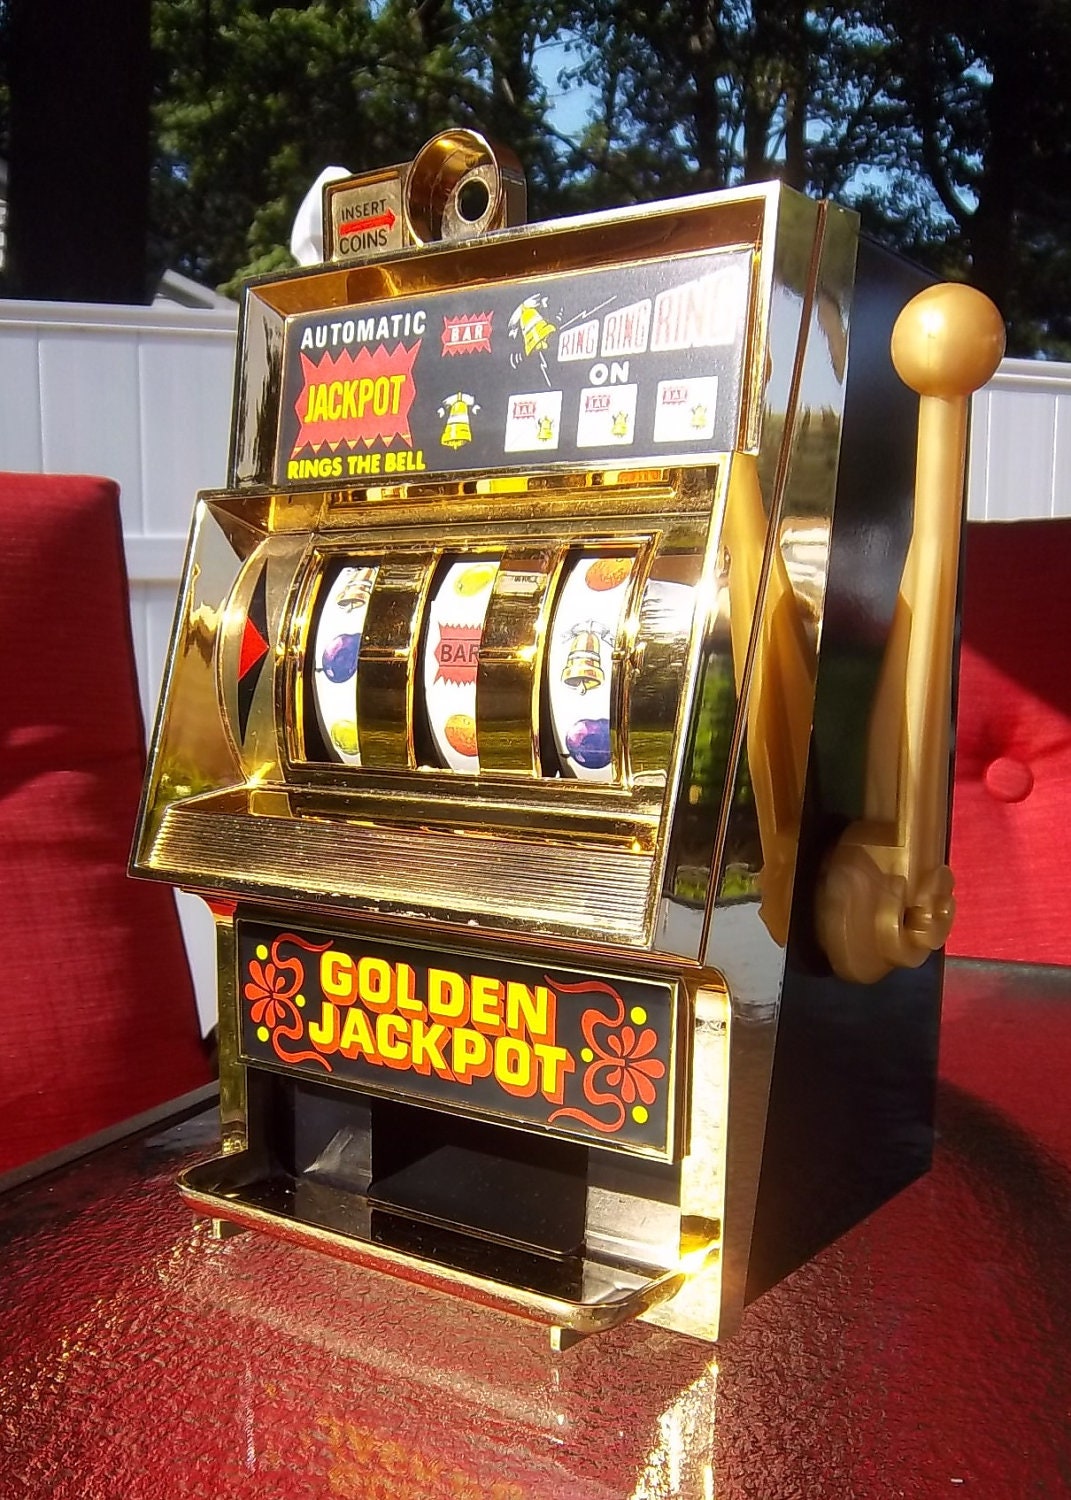 Golden Gate Slot Machine